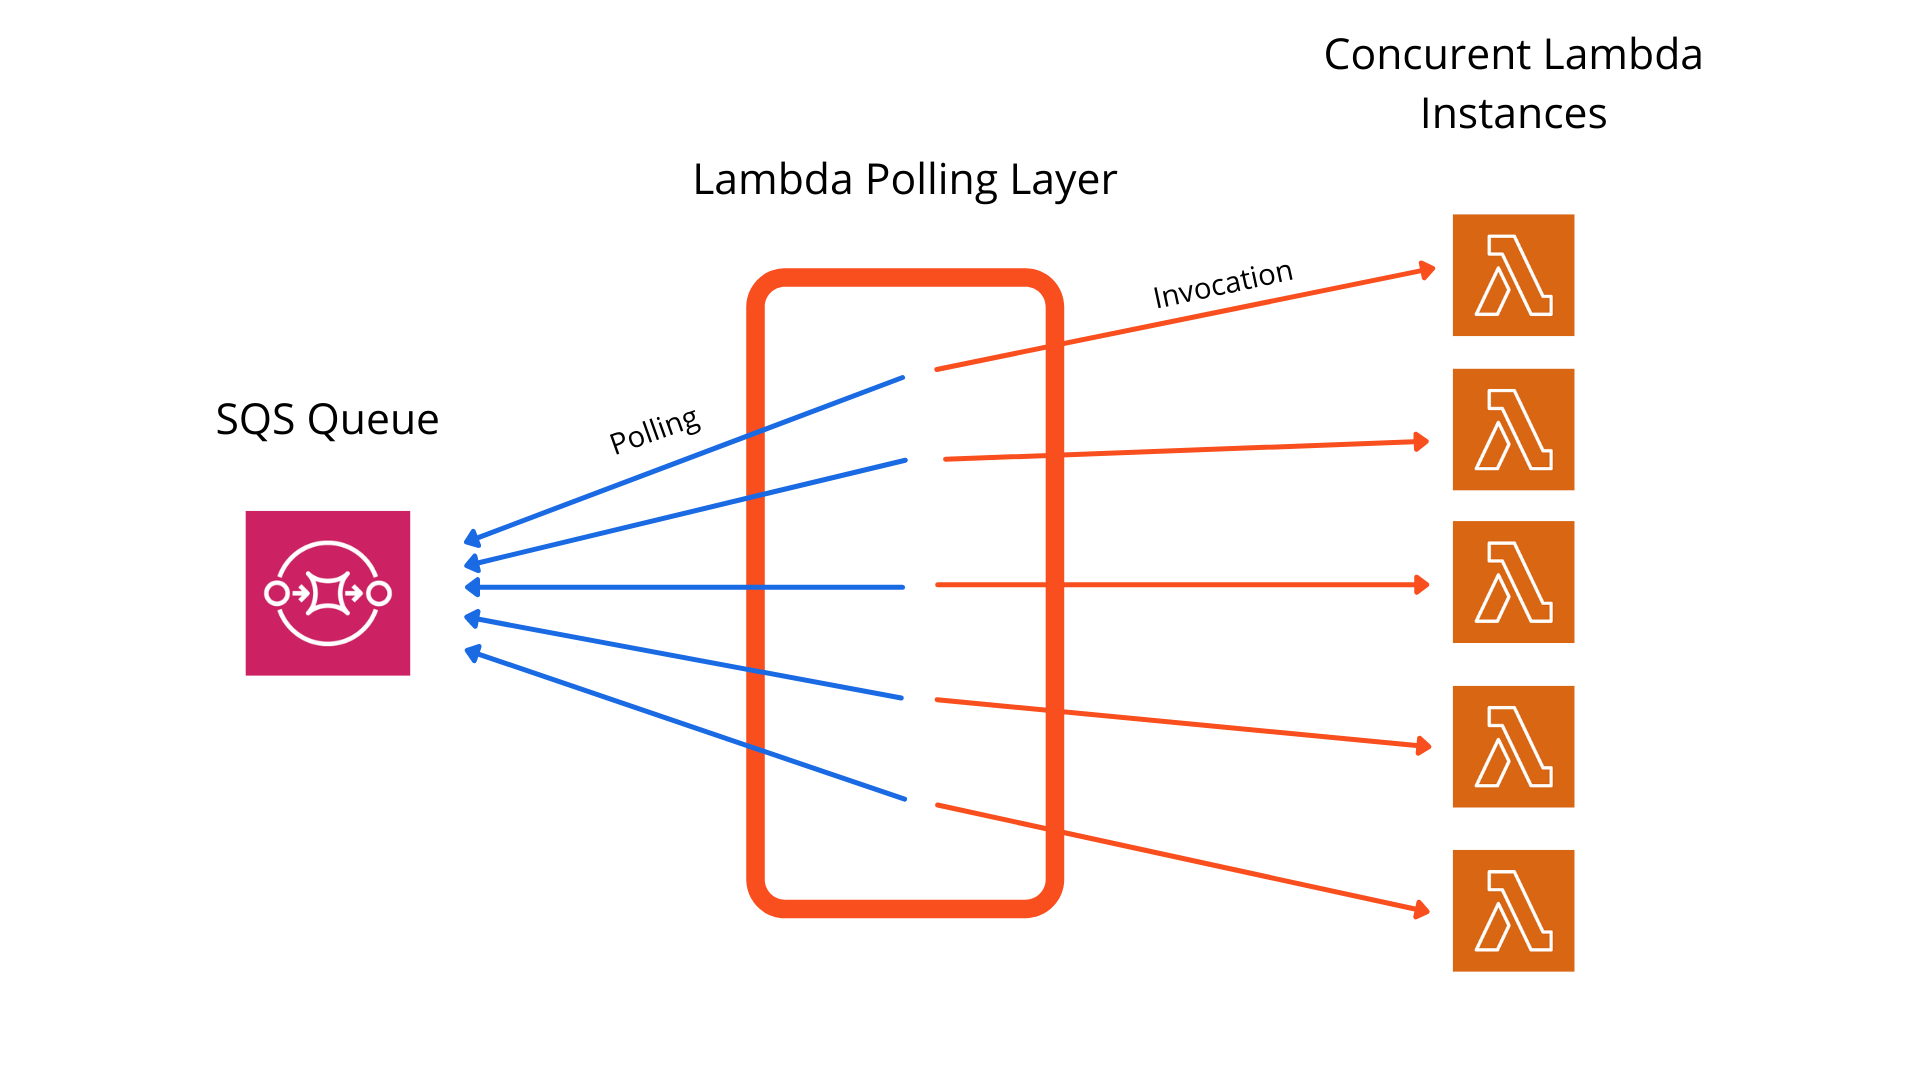 SQS to Lambda polling layer